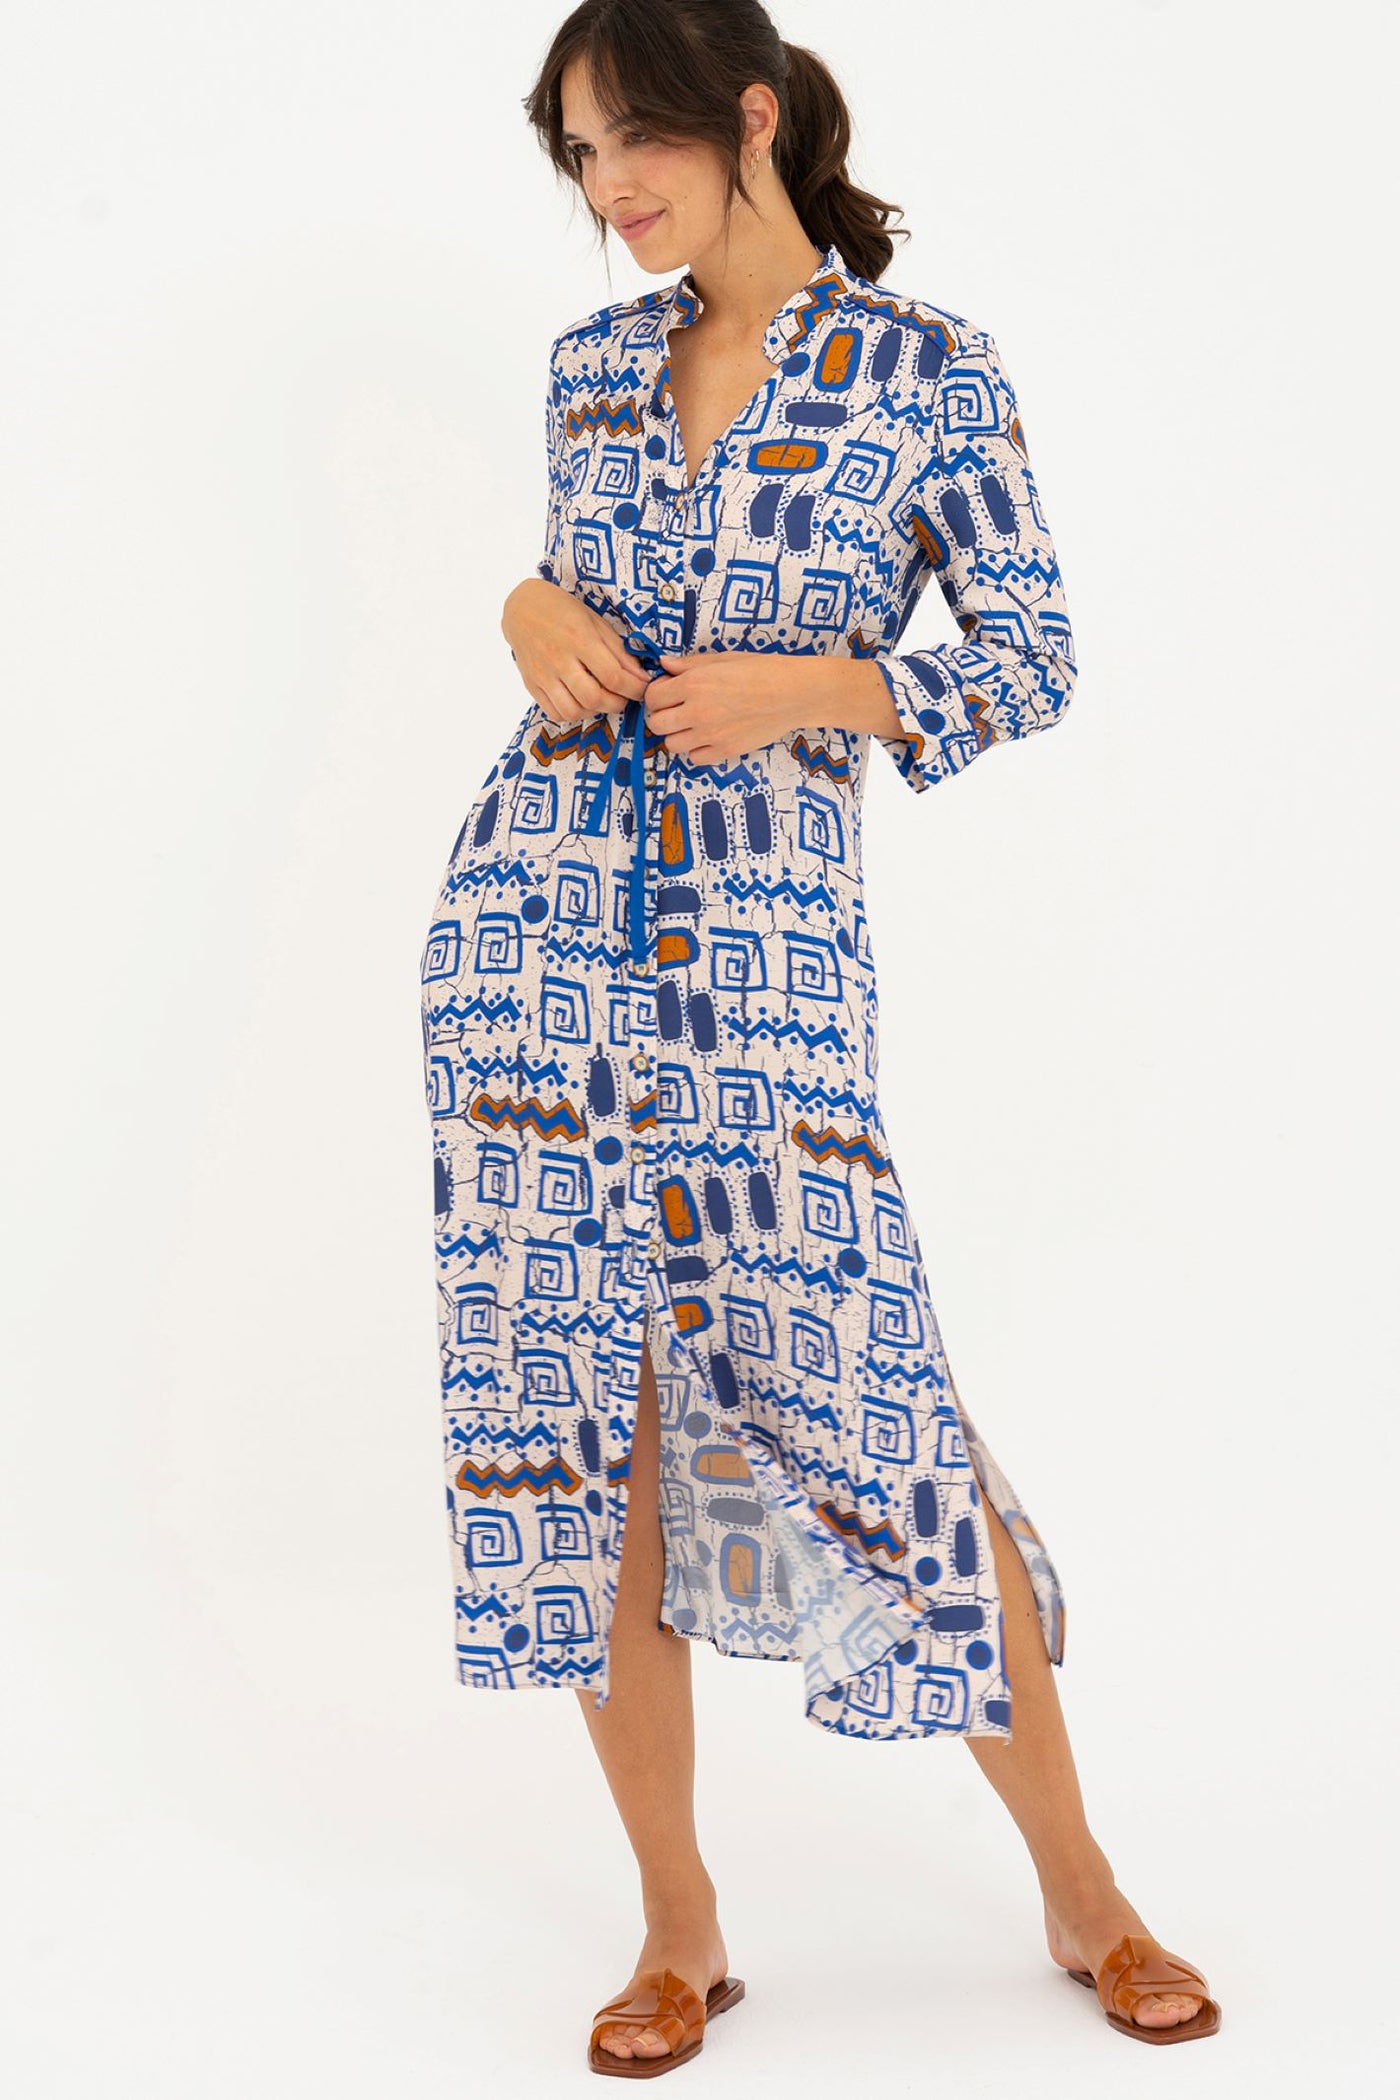 Tinta Style Darla Blue Print Summer Dress